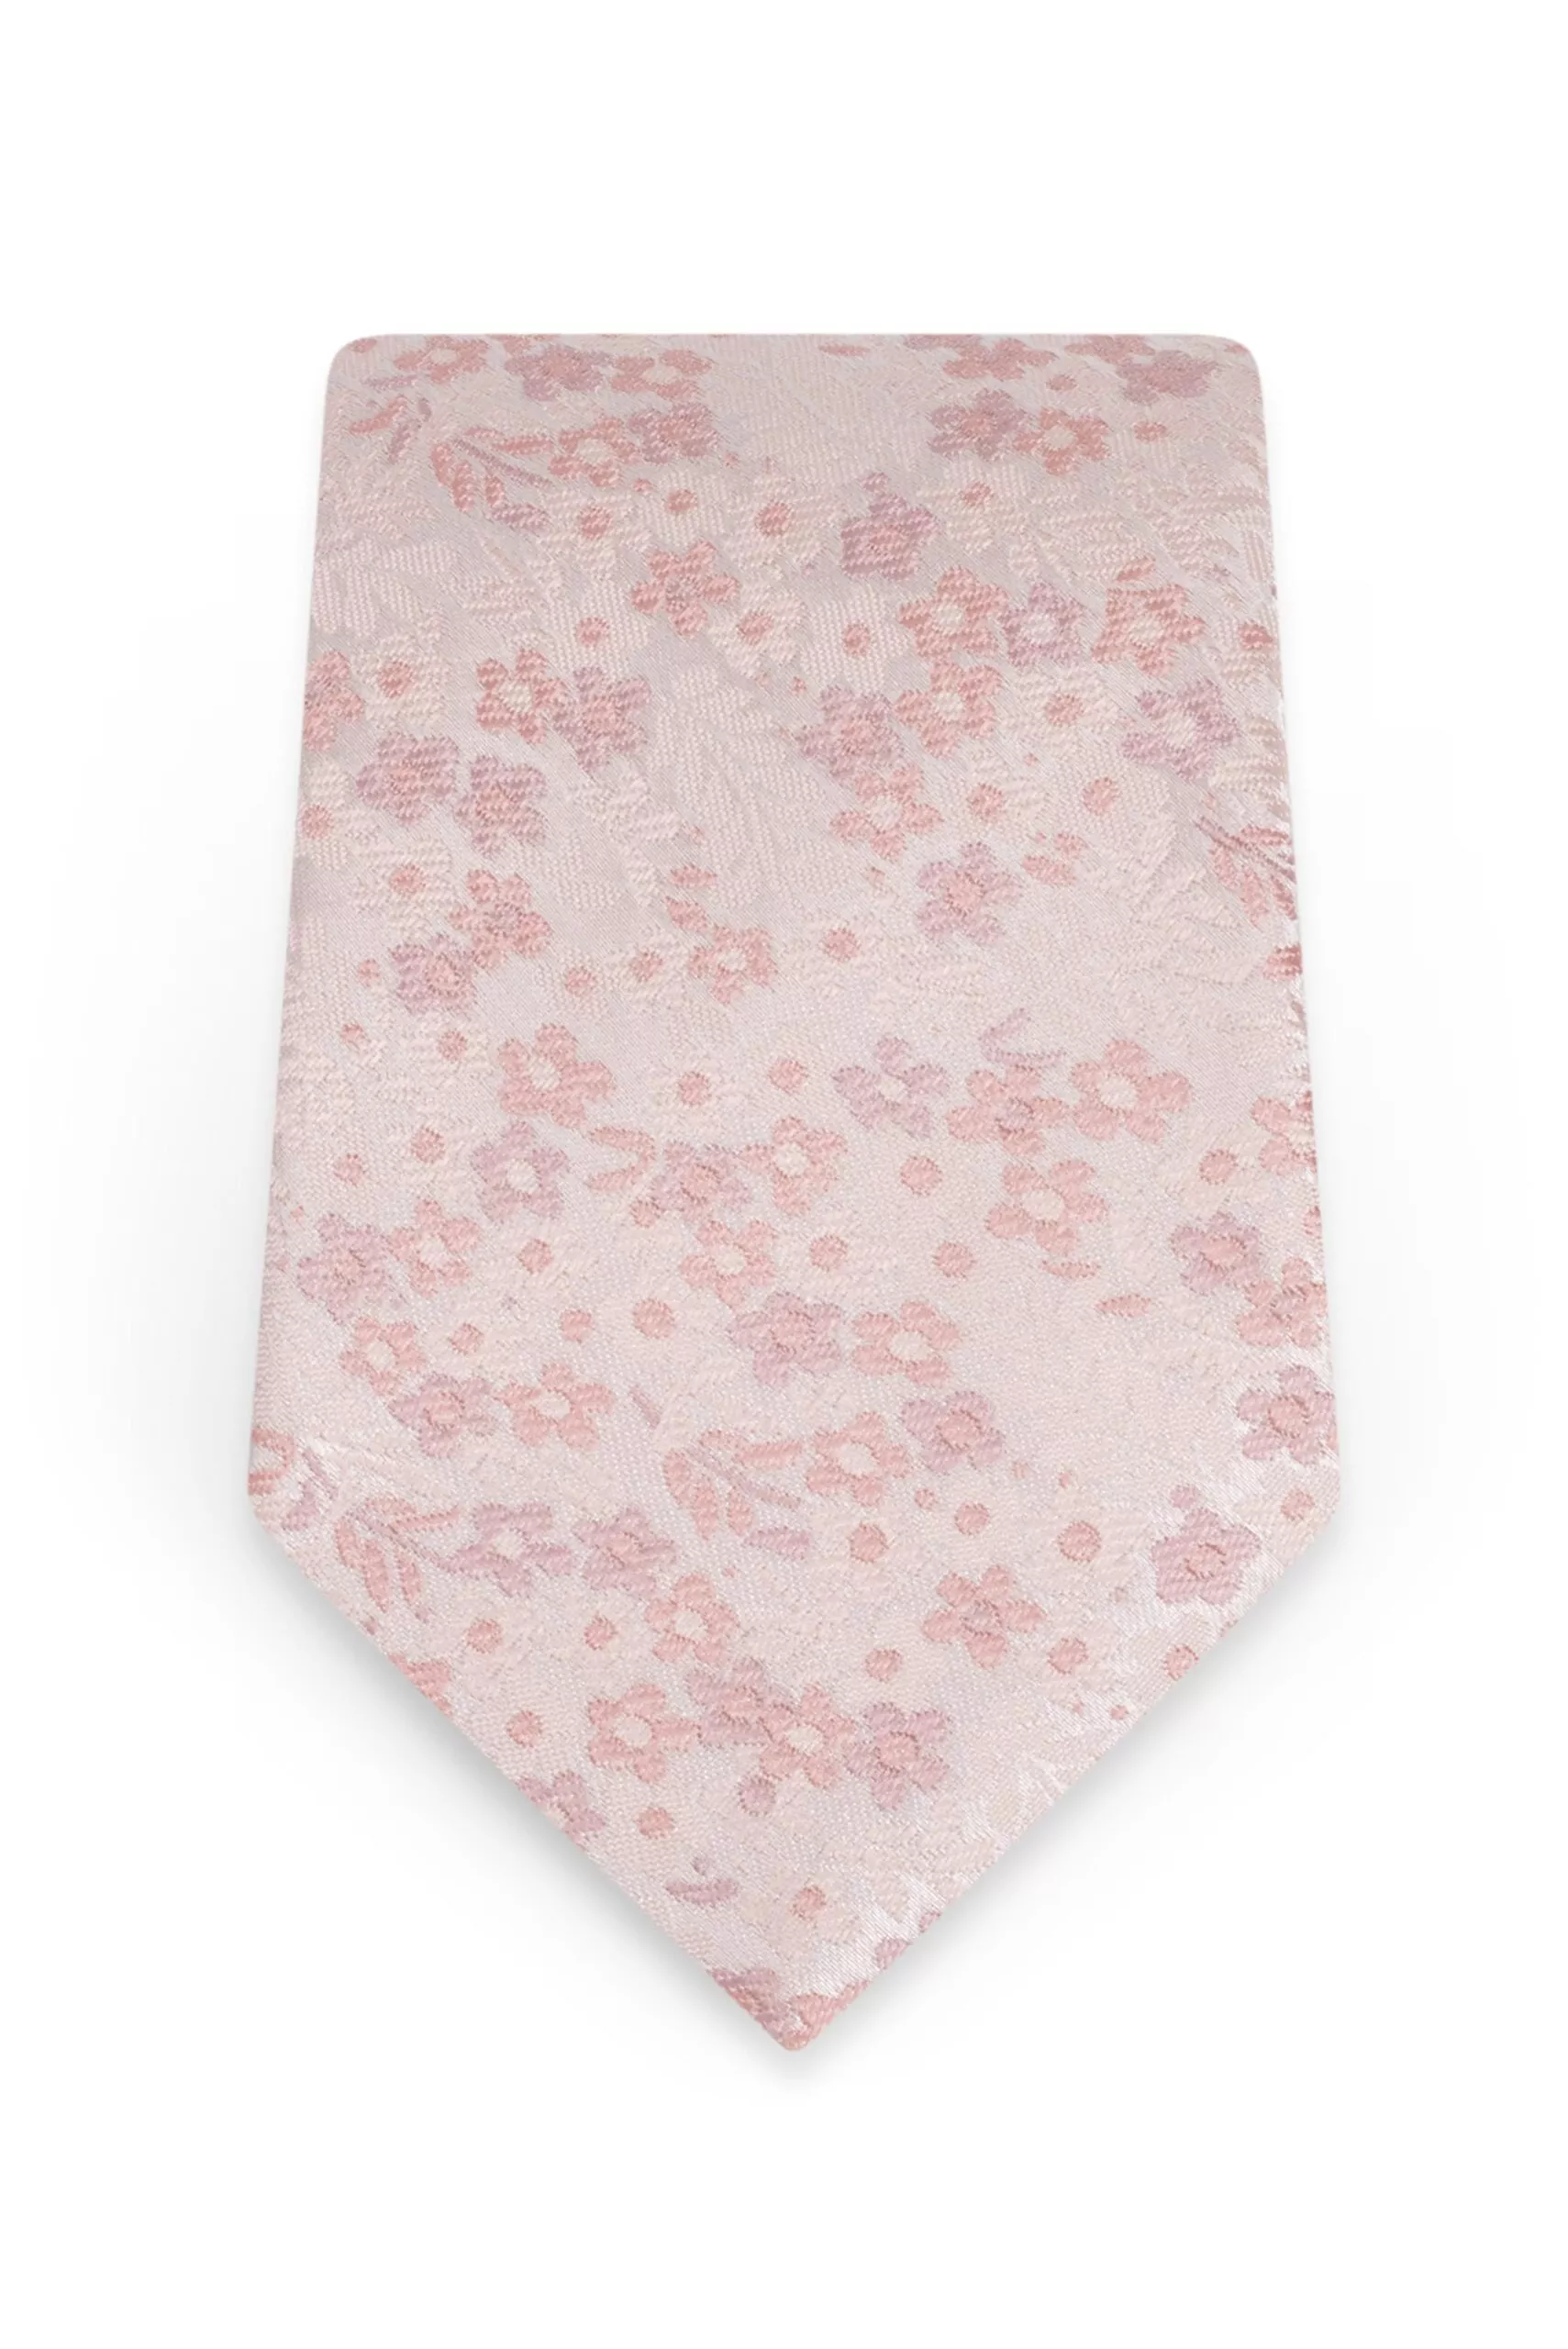 Floral Blush Self-Tie Windsor Tie